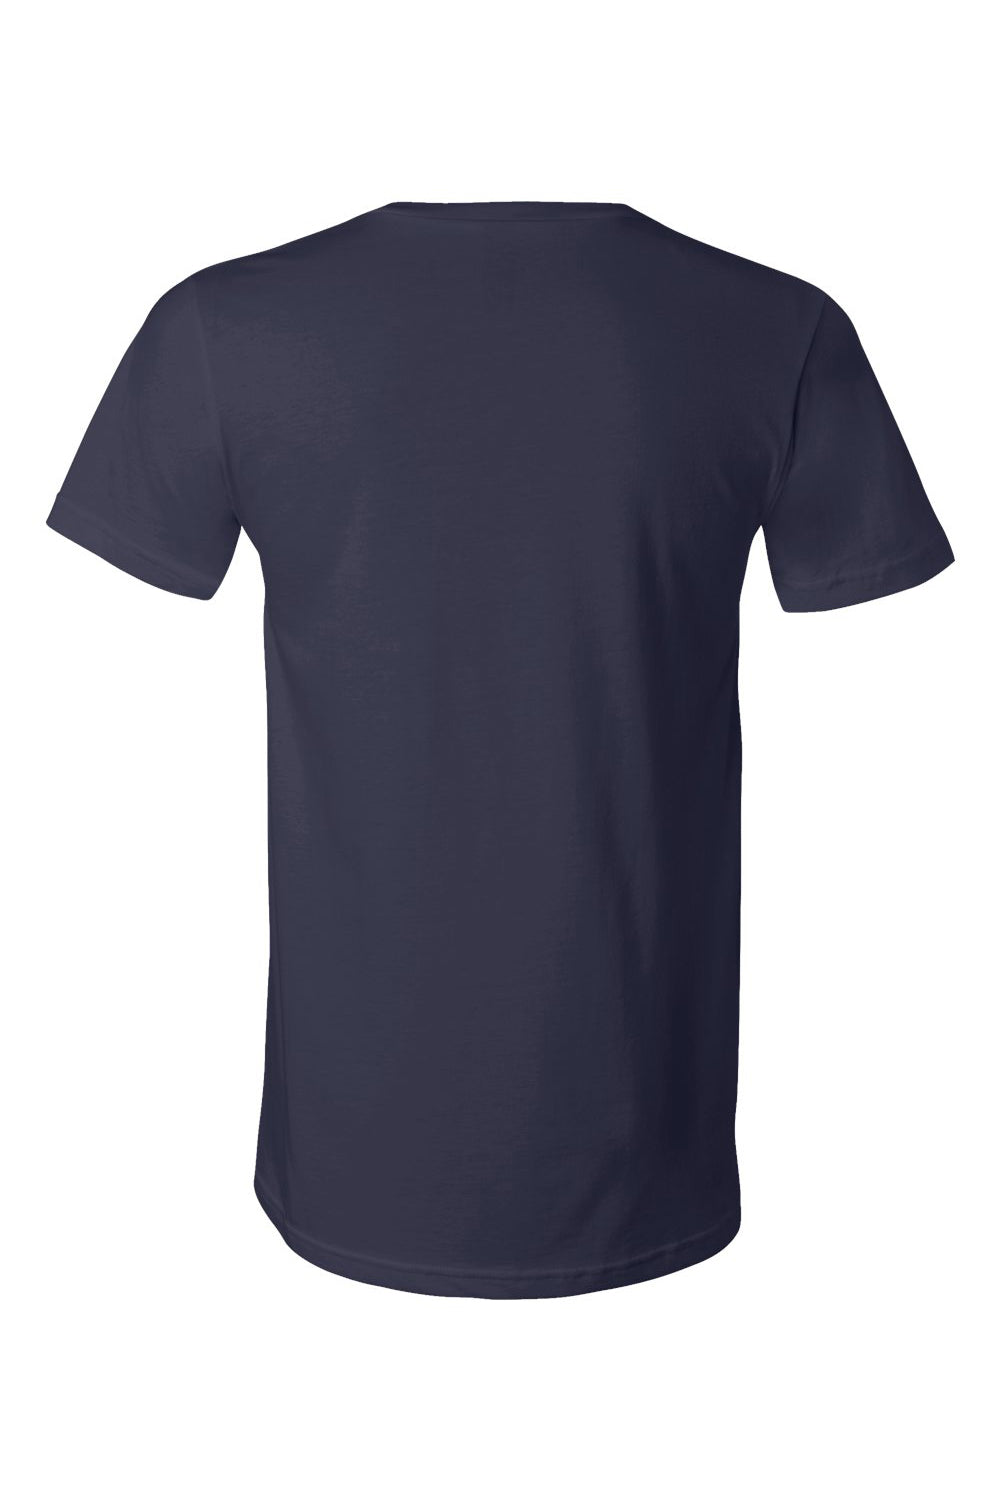 Bella + Canvas BC3005/3005/3655C Mens Jersey Short Sleeve V-Neck T-Shirt Navy Blue Flat Back